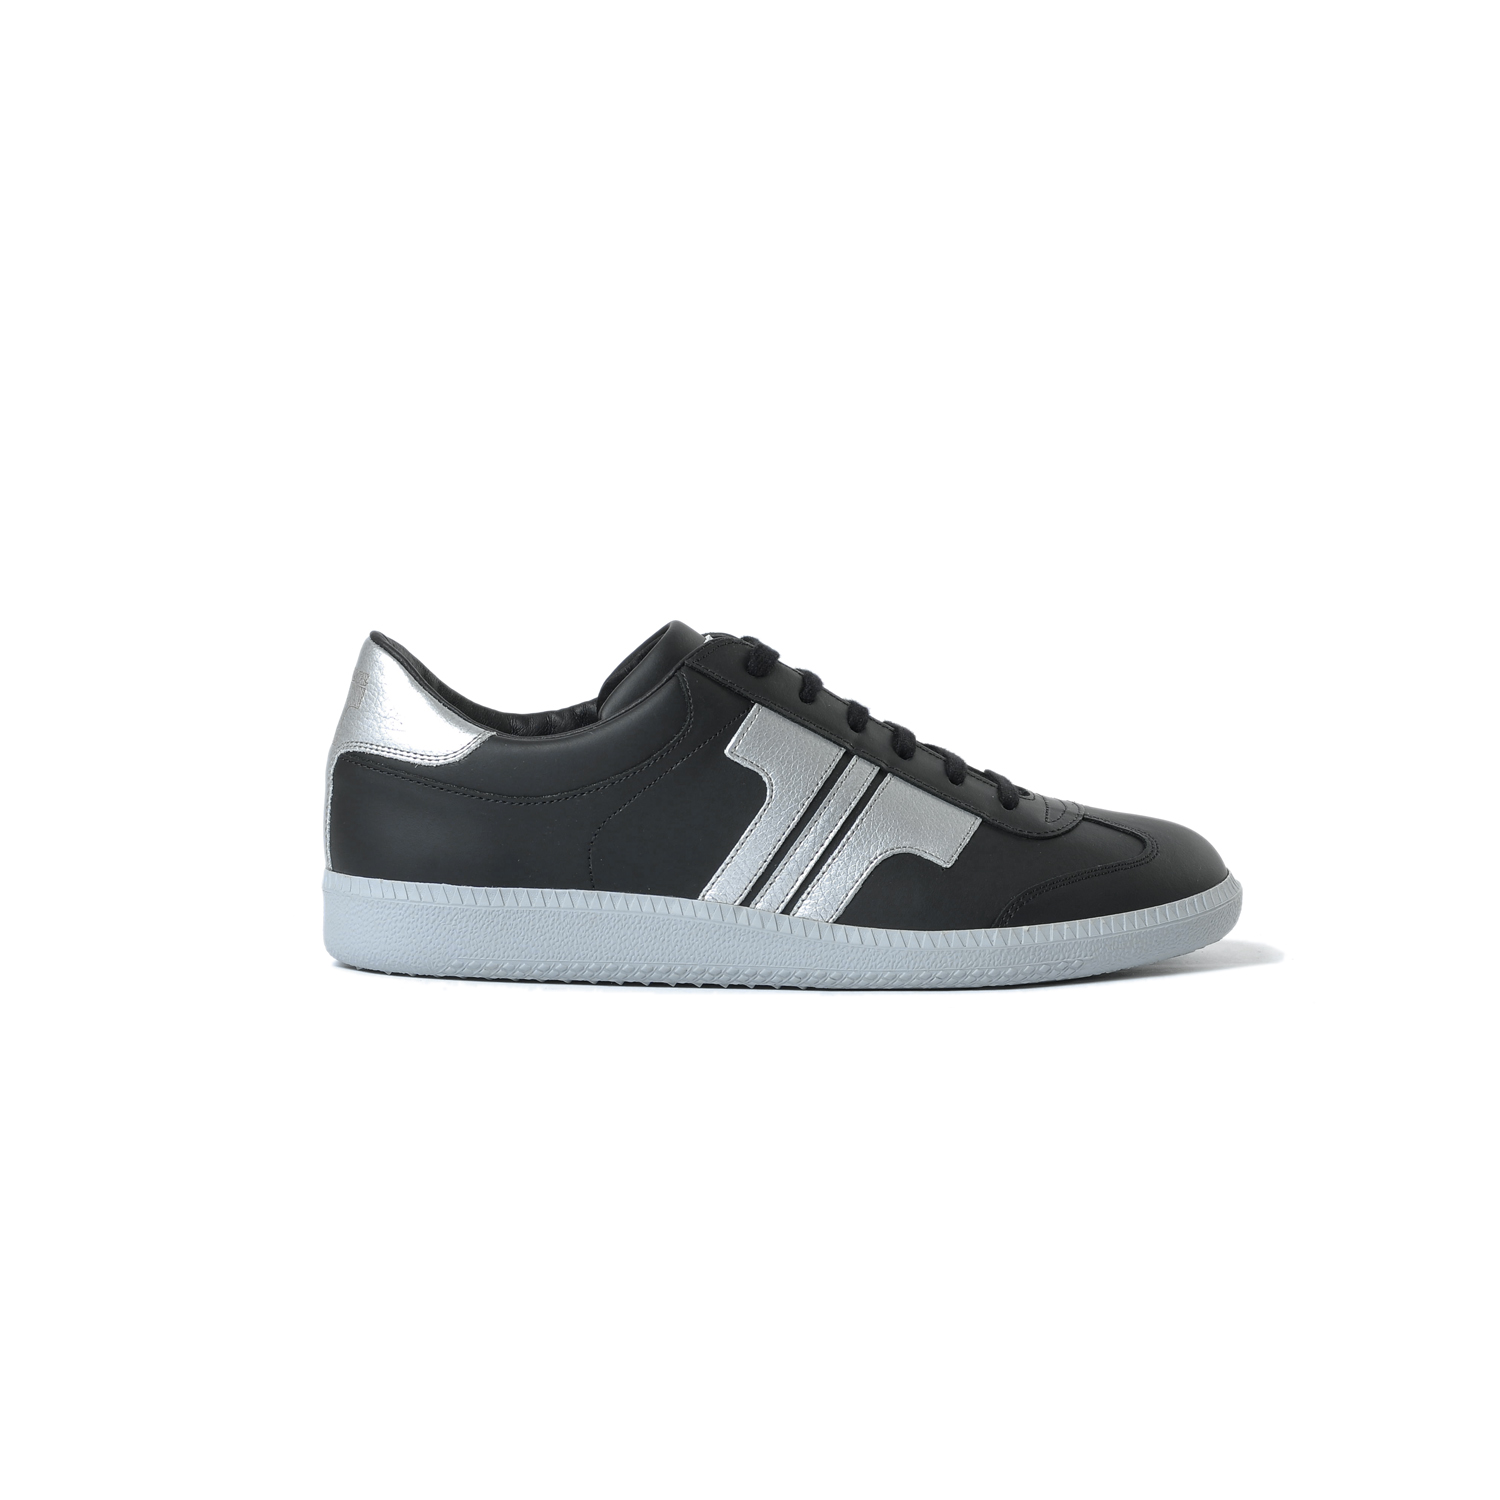 Tisza shoes - Compakt - Black-silver